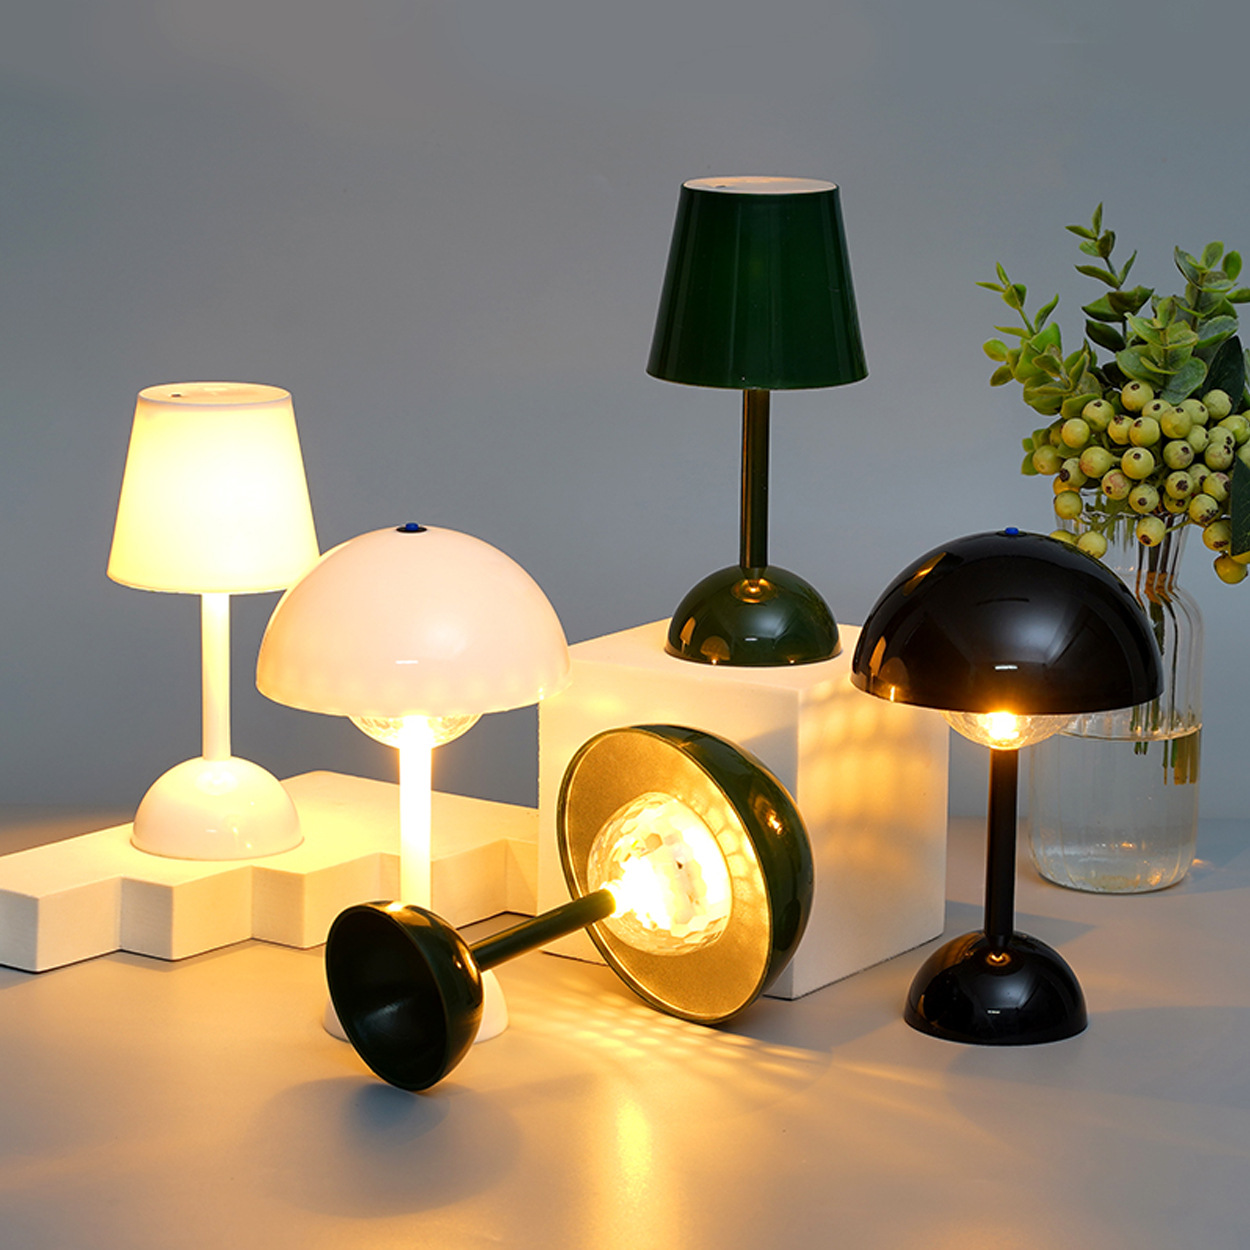 Exclusive for Cross-Border Led Creative Table Lamp Mushroom Lamp Bud Table Lamp Internet Celebrity Bedroom Desktop Decoration Ambience Light